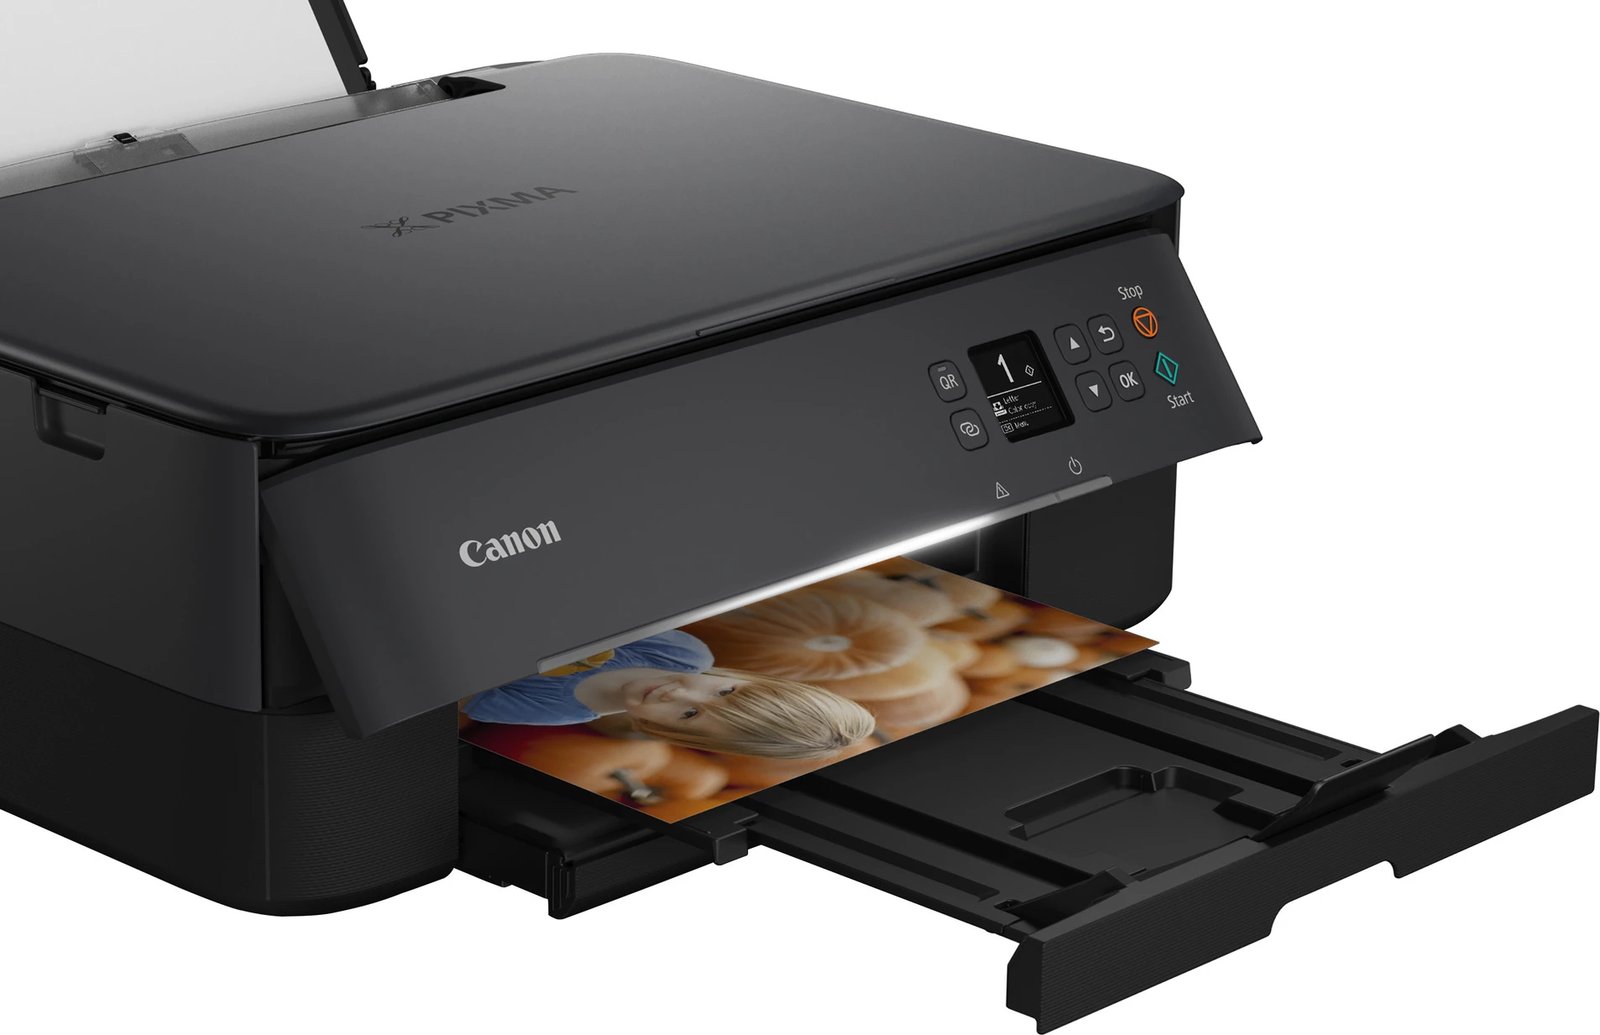 Printer Wireless Canon Pixma TS5350A, i zi